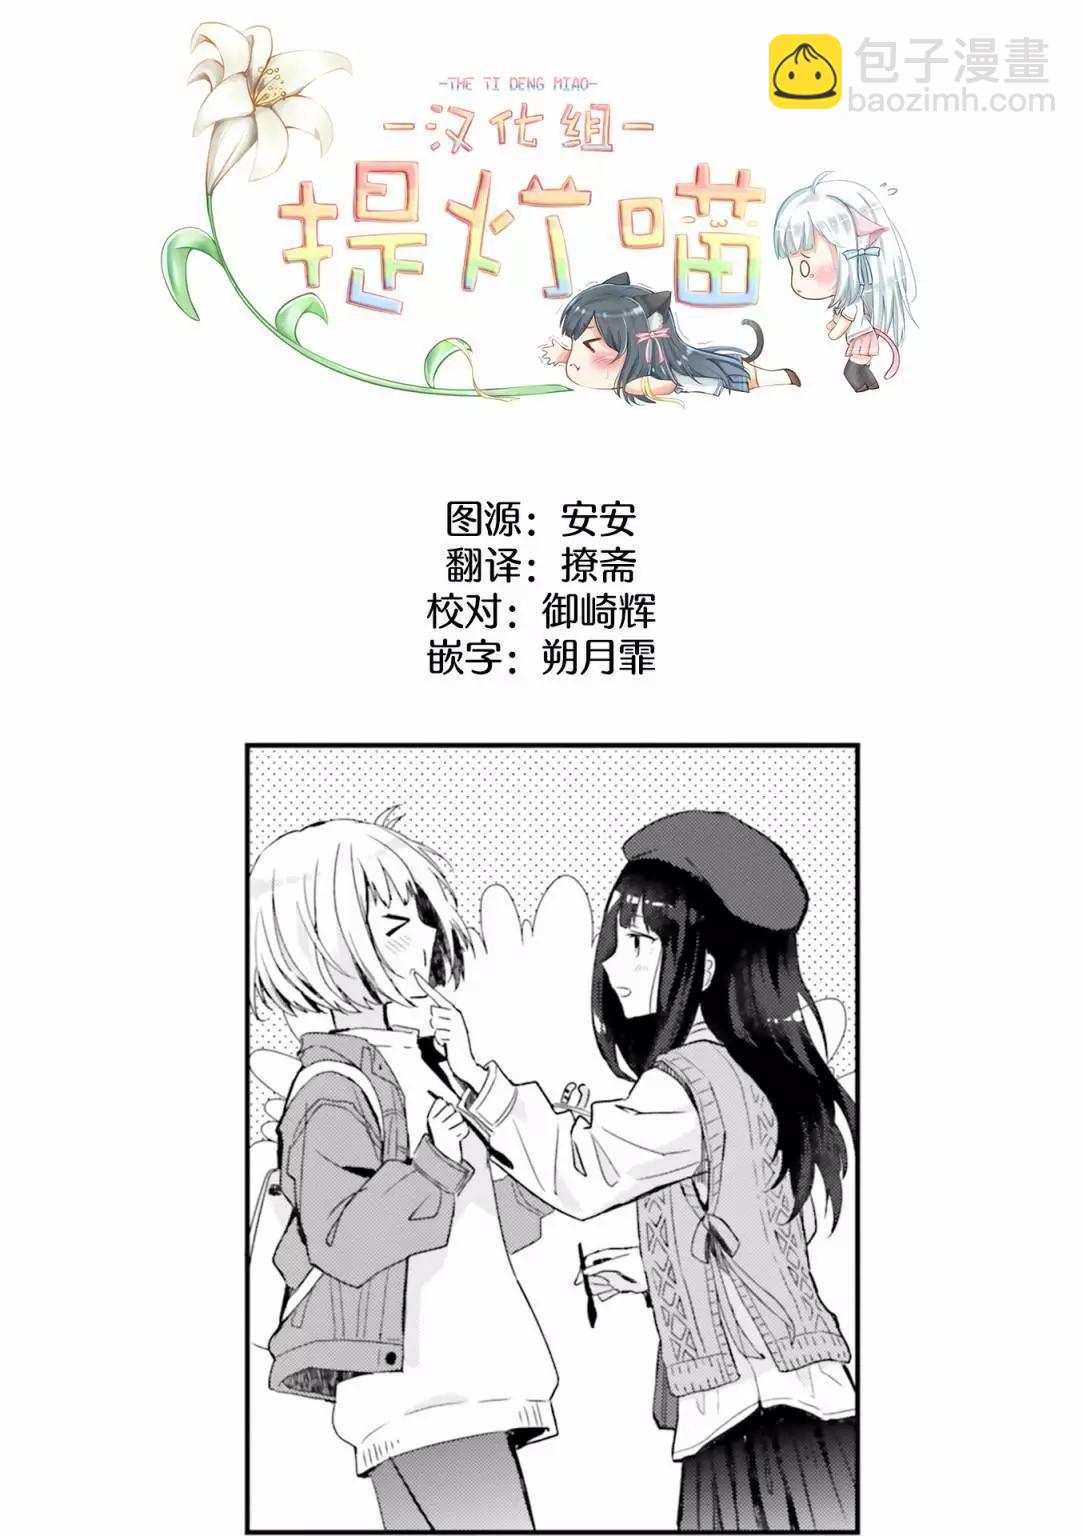 莉可麗絲官方漫畫短篇集REPEAT - repeat02 - 3